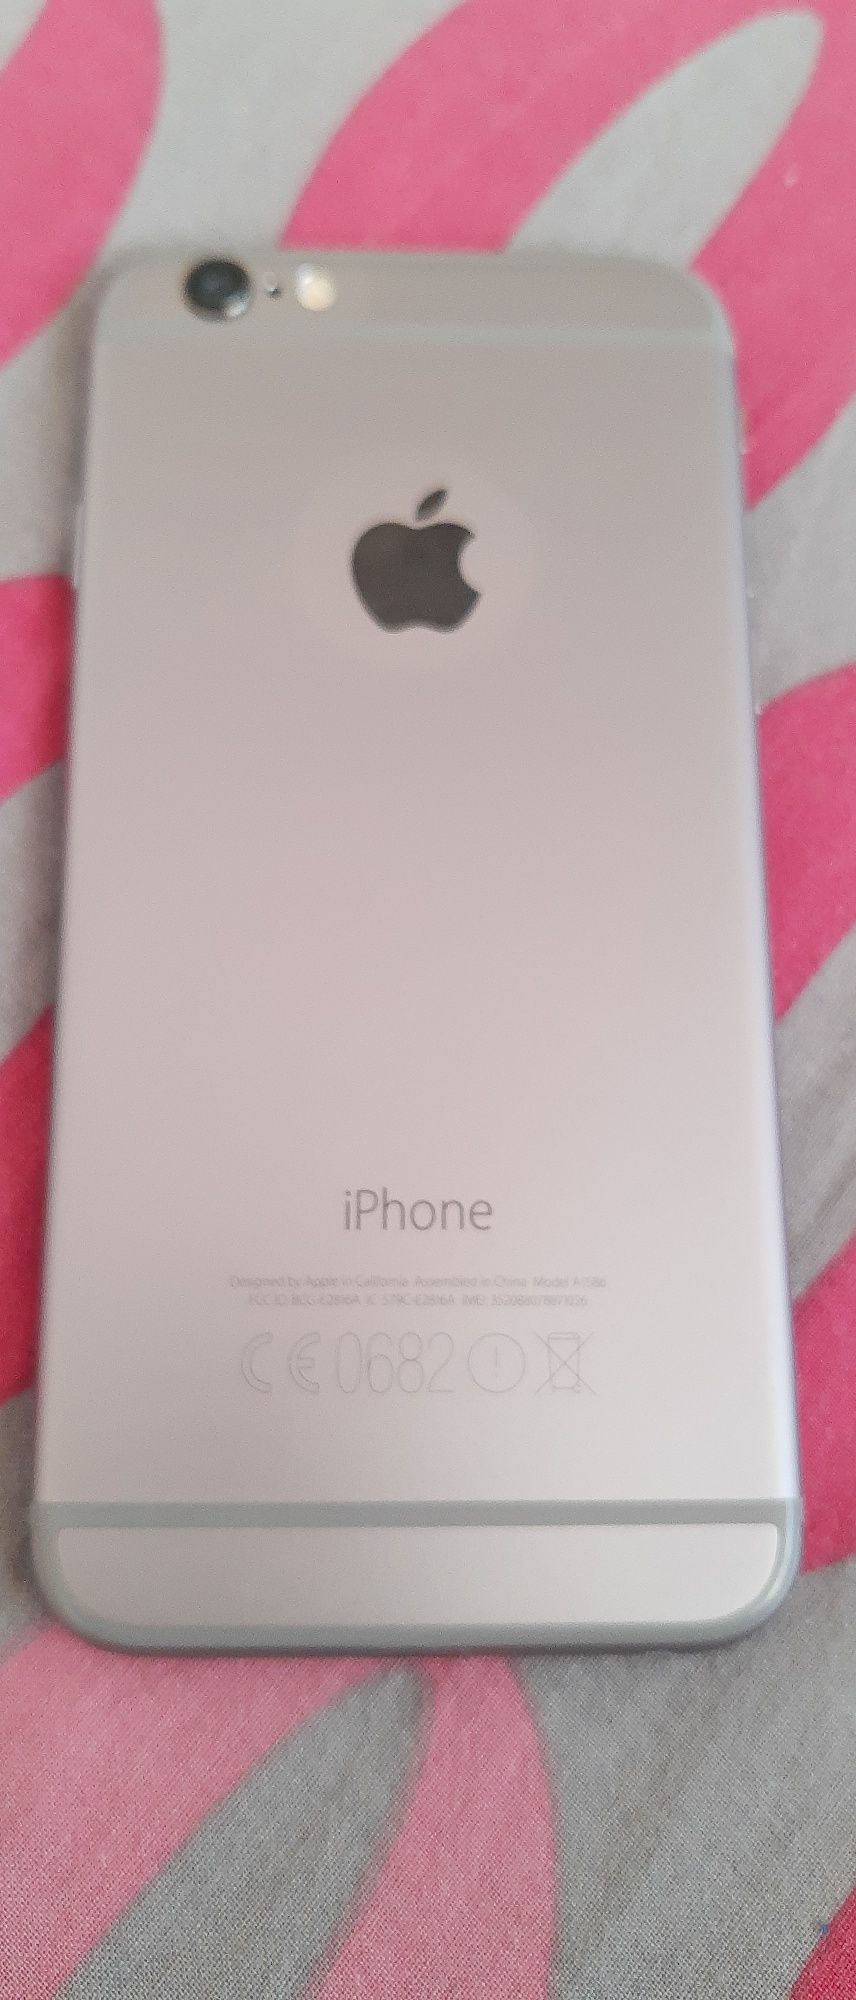 Iphone 6 16GB Silver